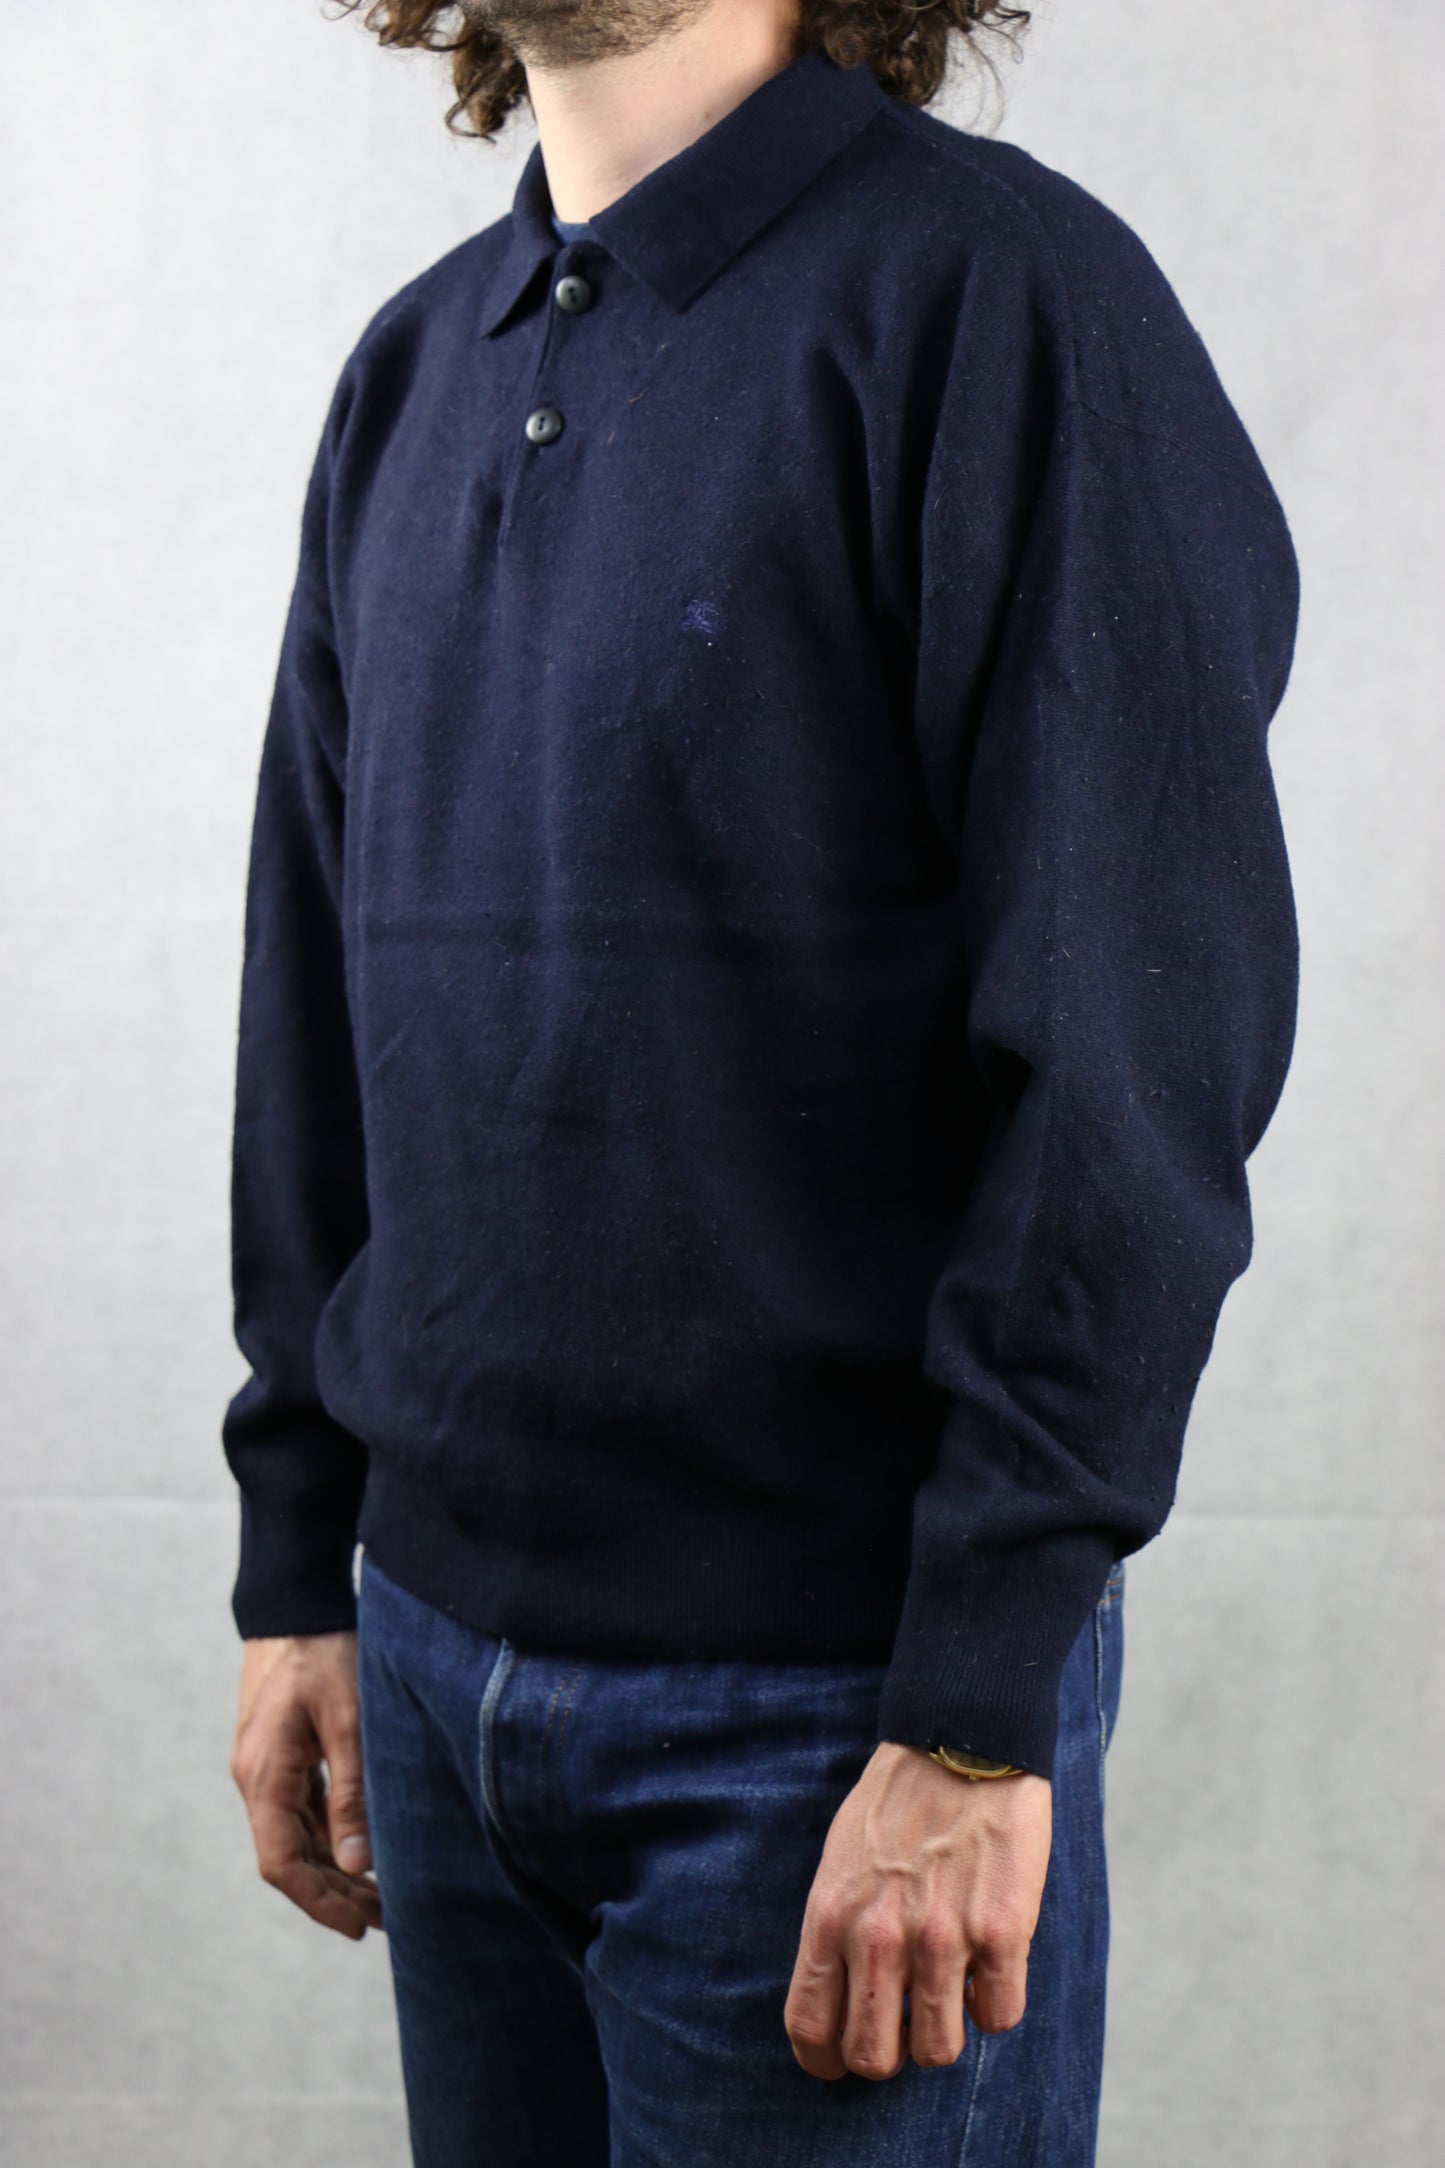 Burberrys' Polo Sweater - vintage clothing clochard92.com